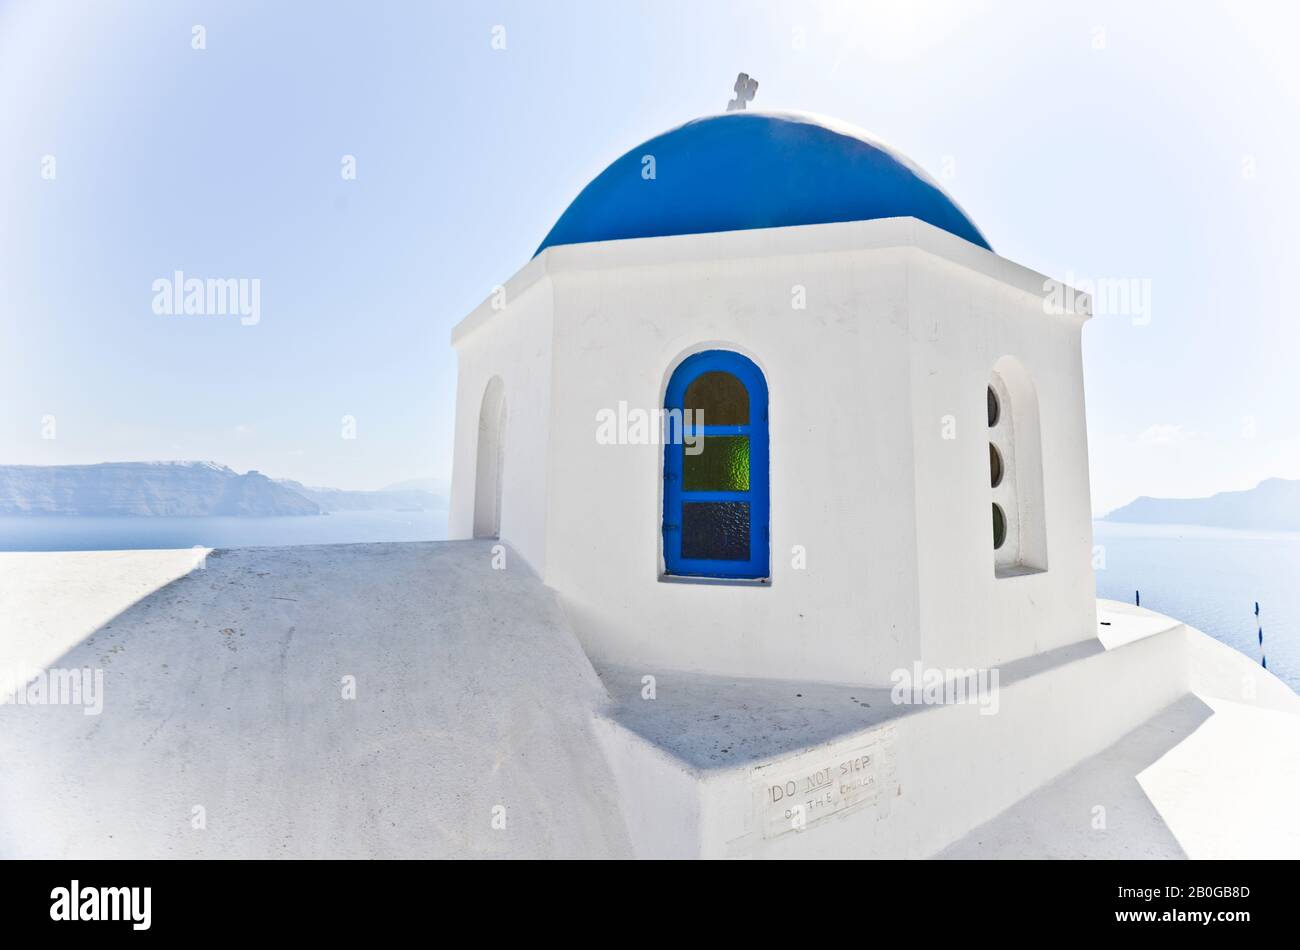 Typical blue dome church in Oia, Santorini island, Greece Stock Photo